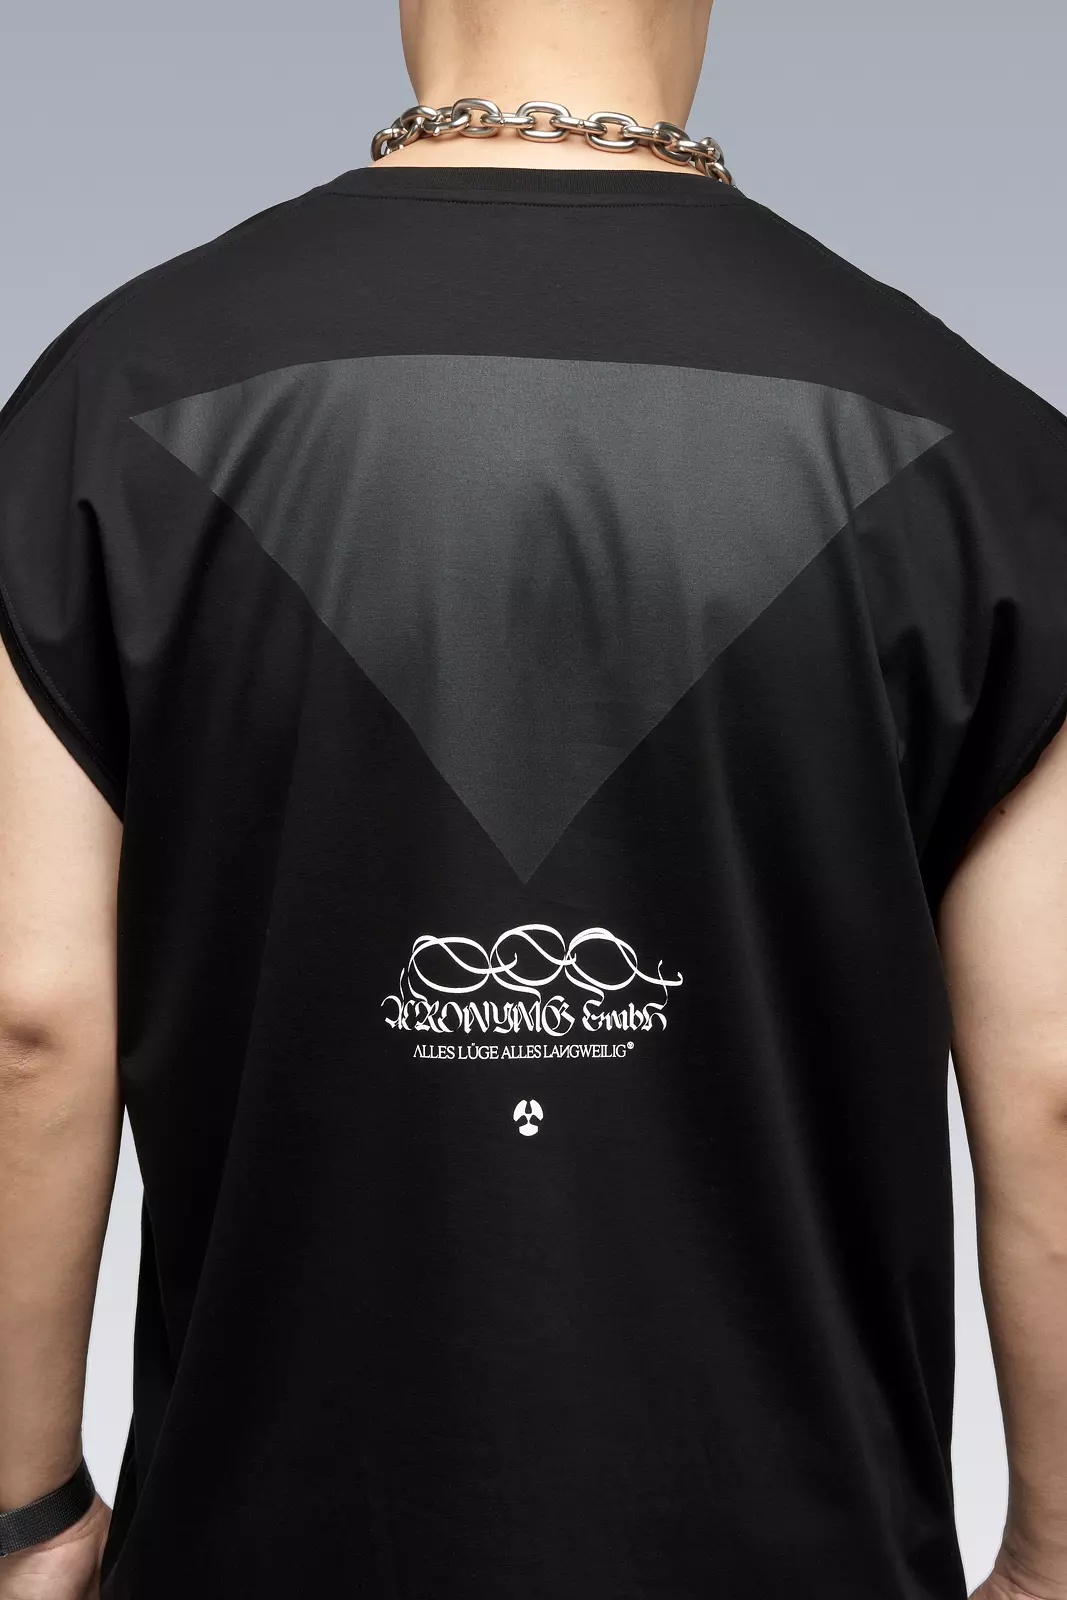 S25-PR-A 100% Cotton Mercerized Sleeveless T-shirt Black - 4